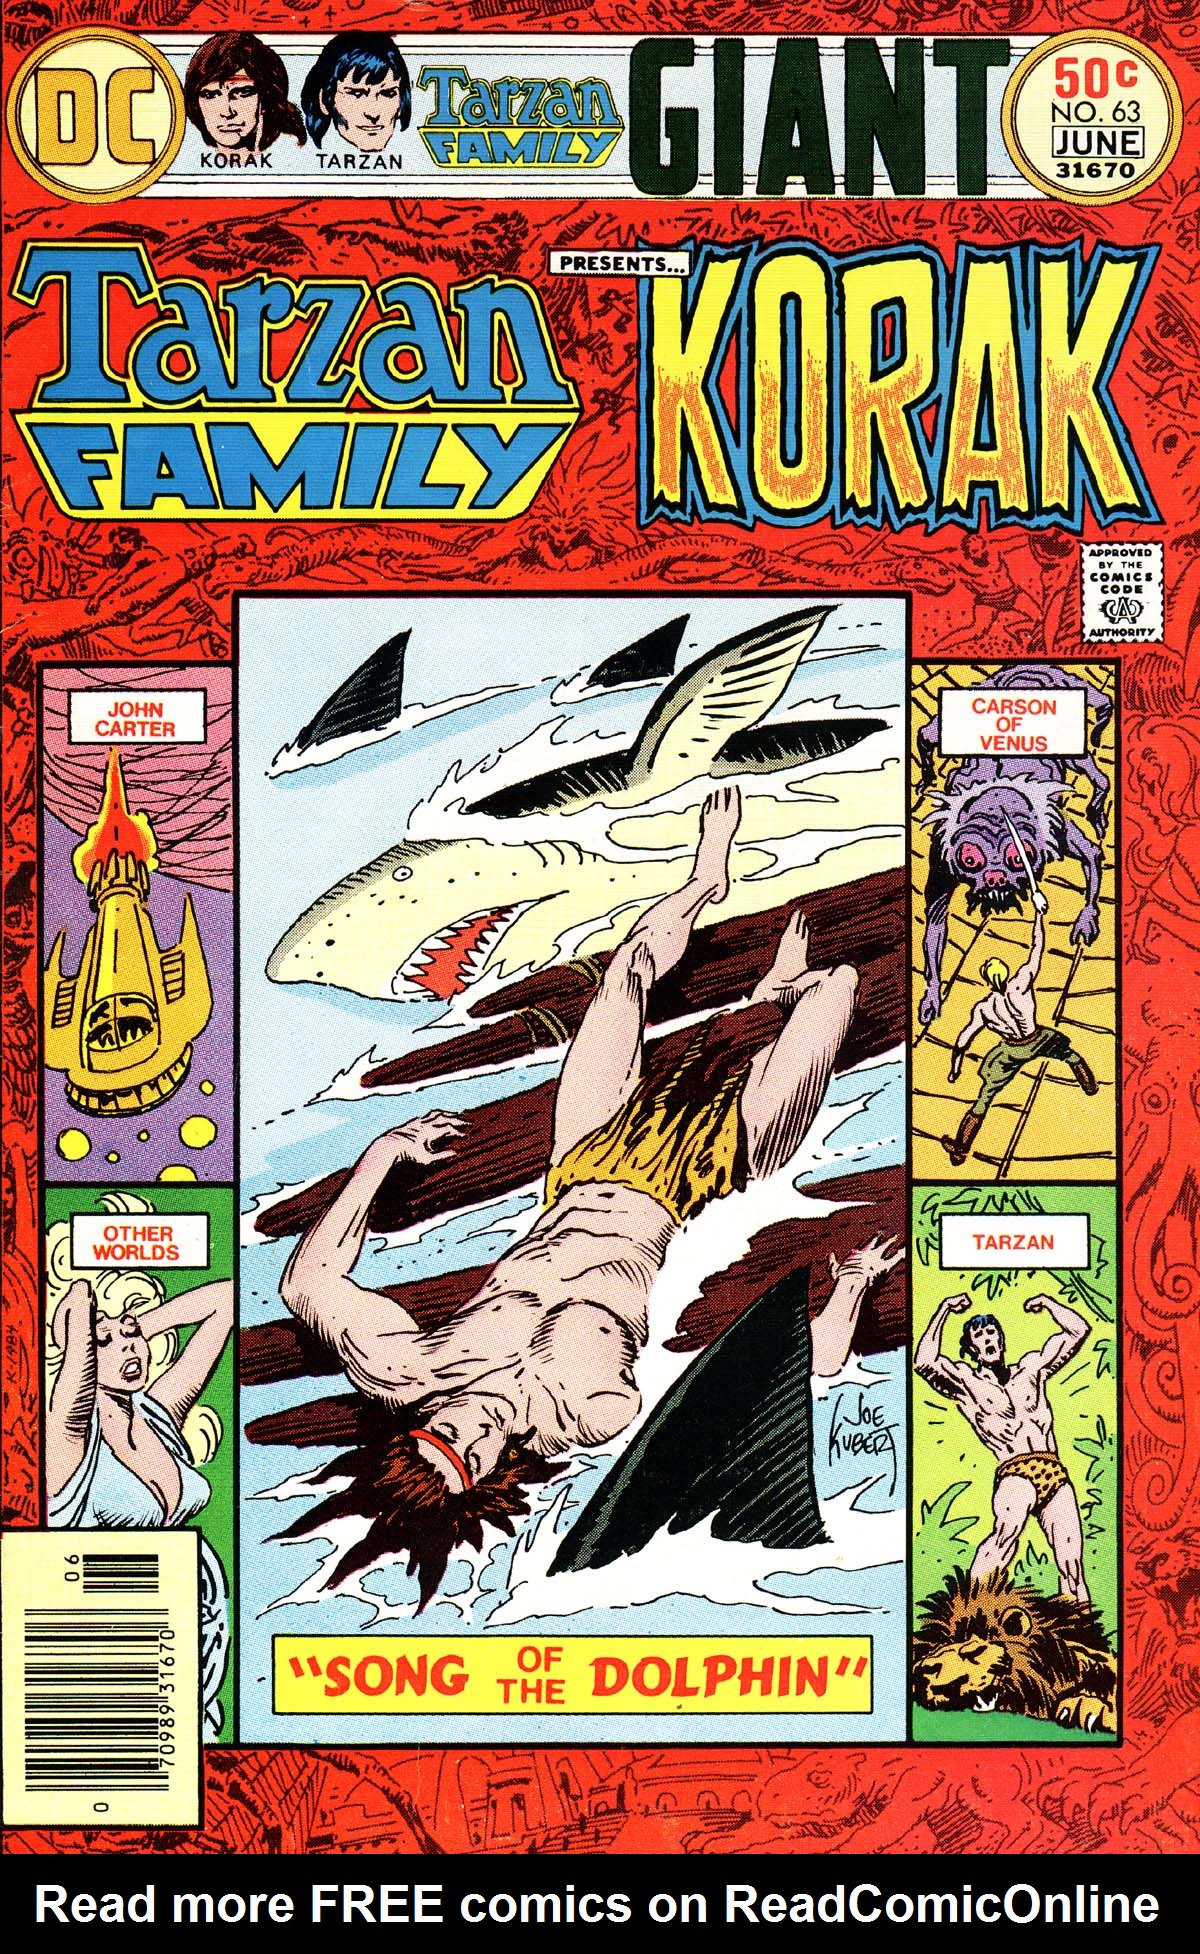 Read online Tarzan Family comic -  Issue #63 - 1